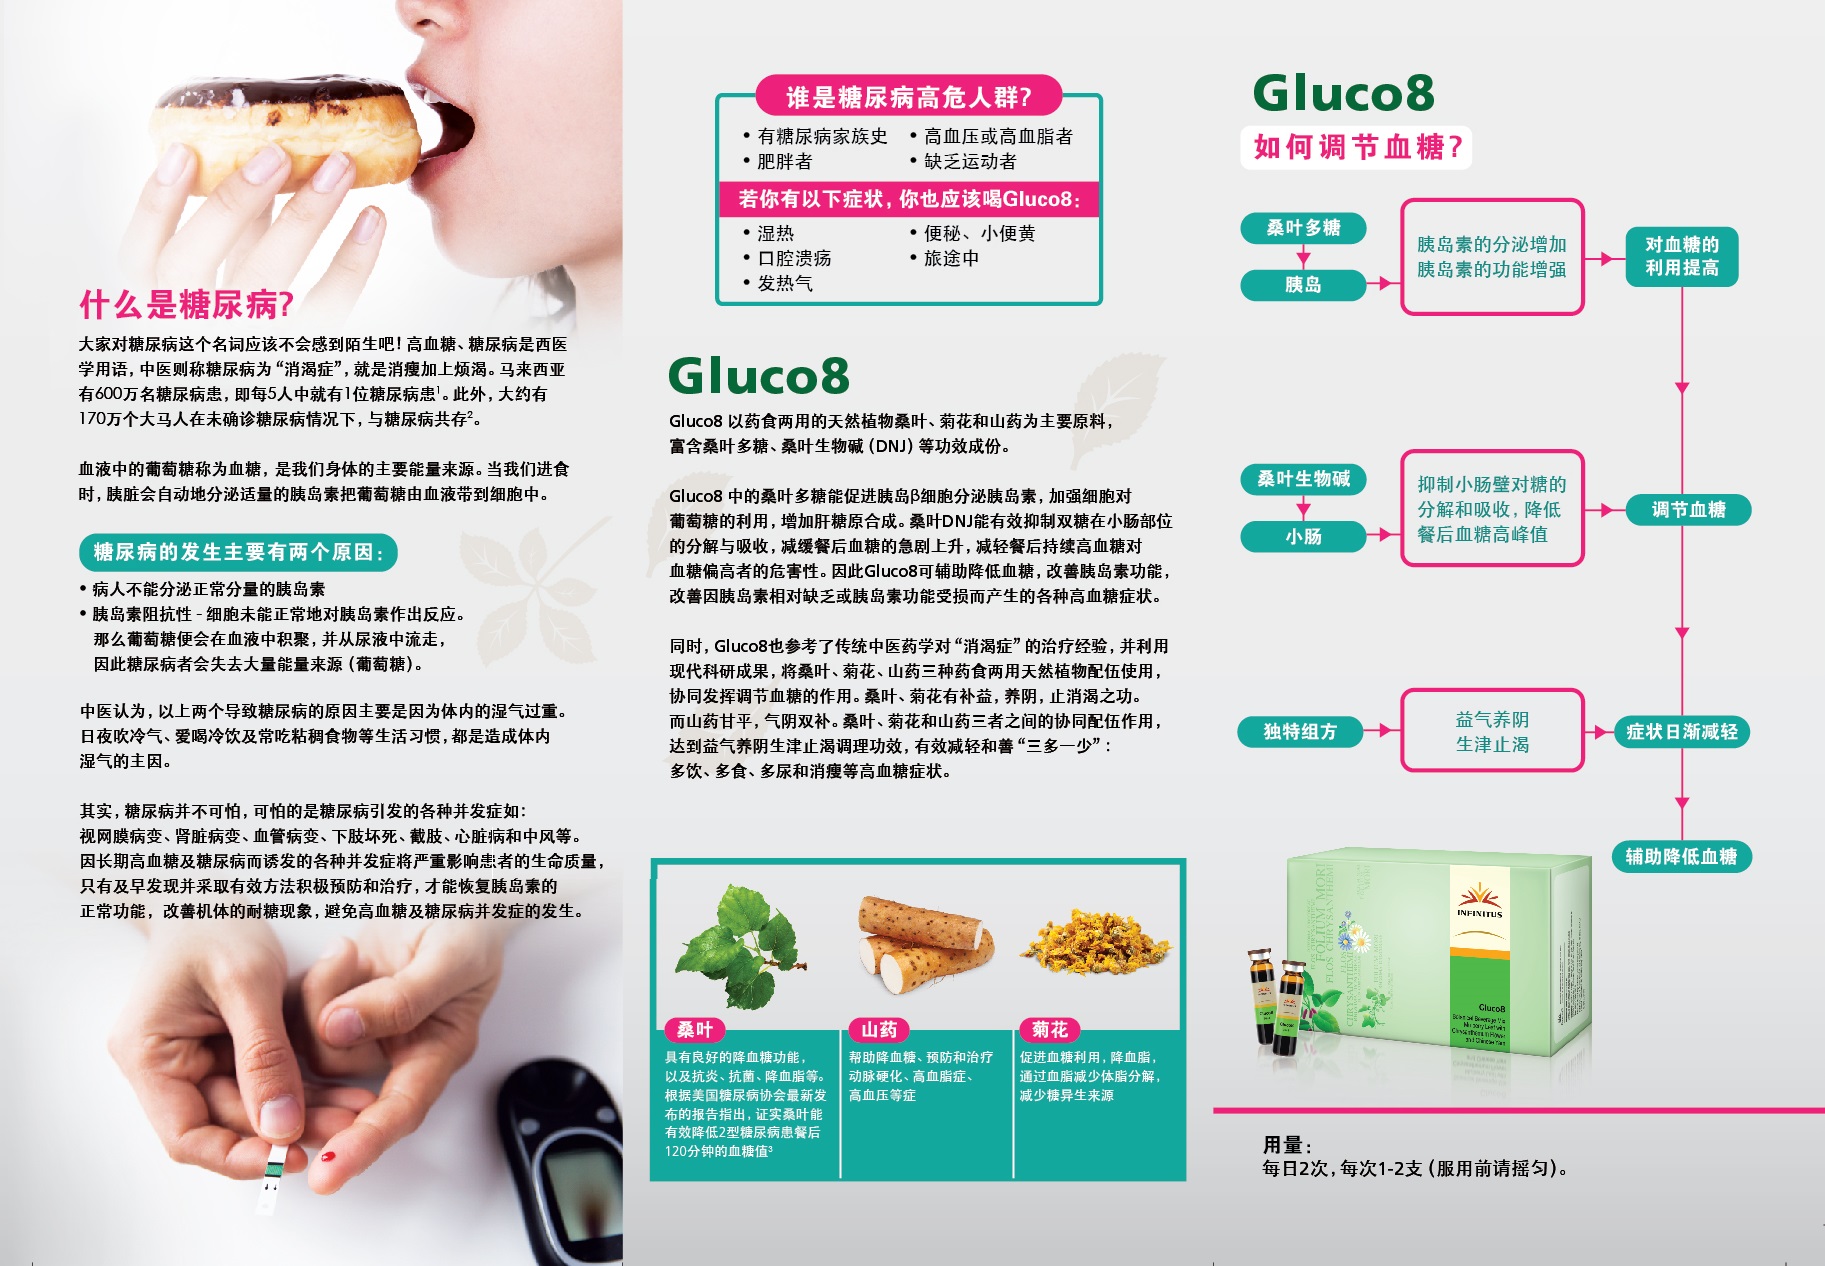 Gluco8 Brochure Rear (Chinese).jpg